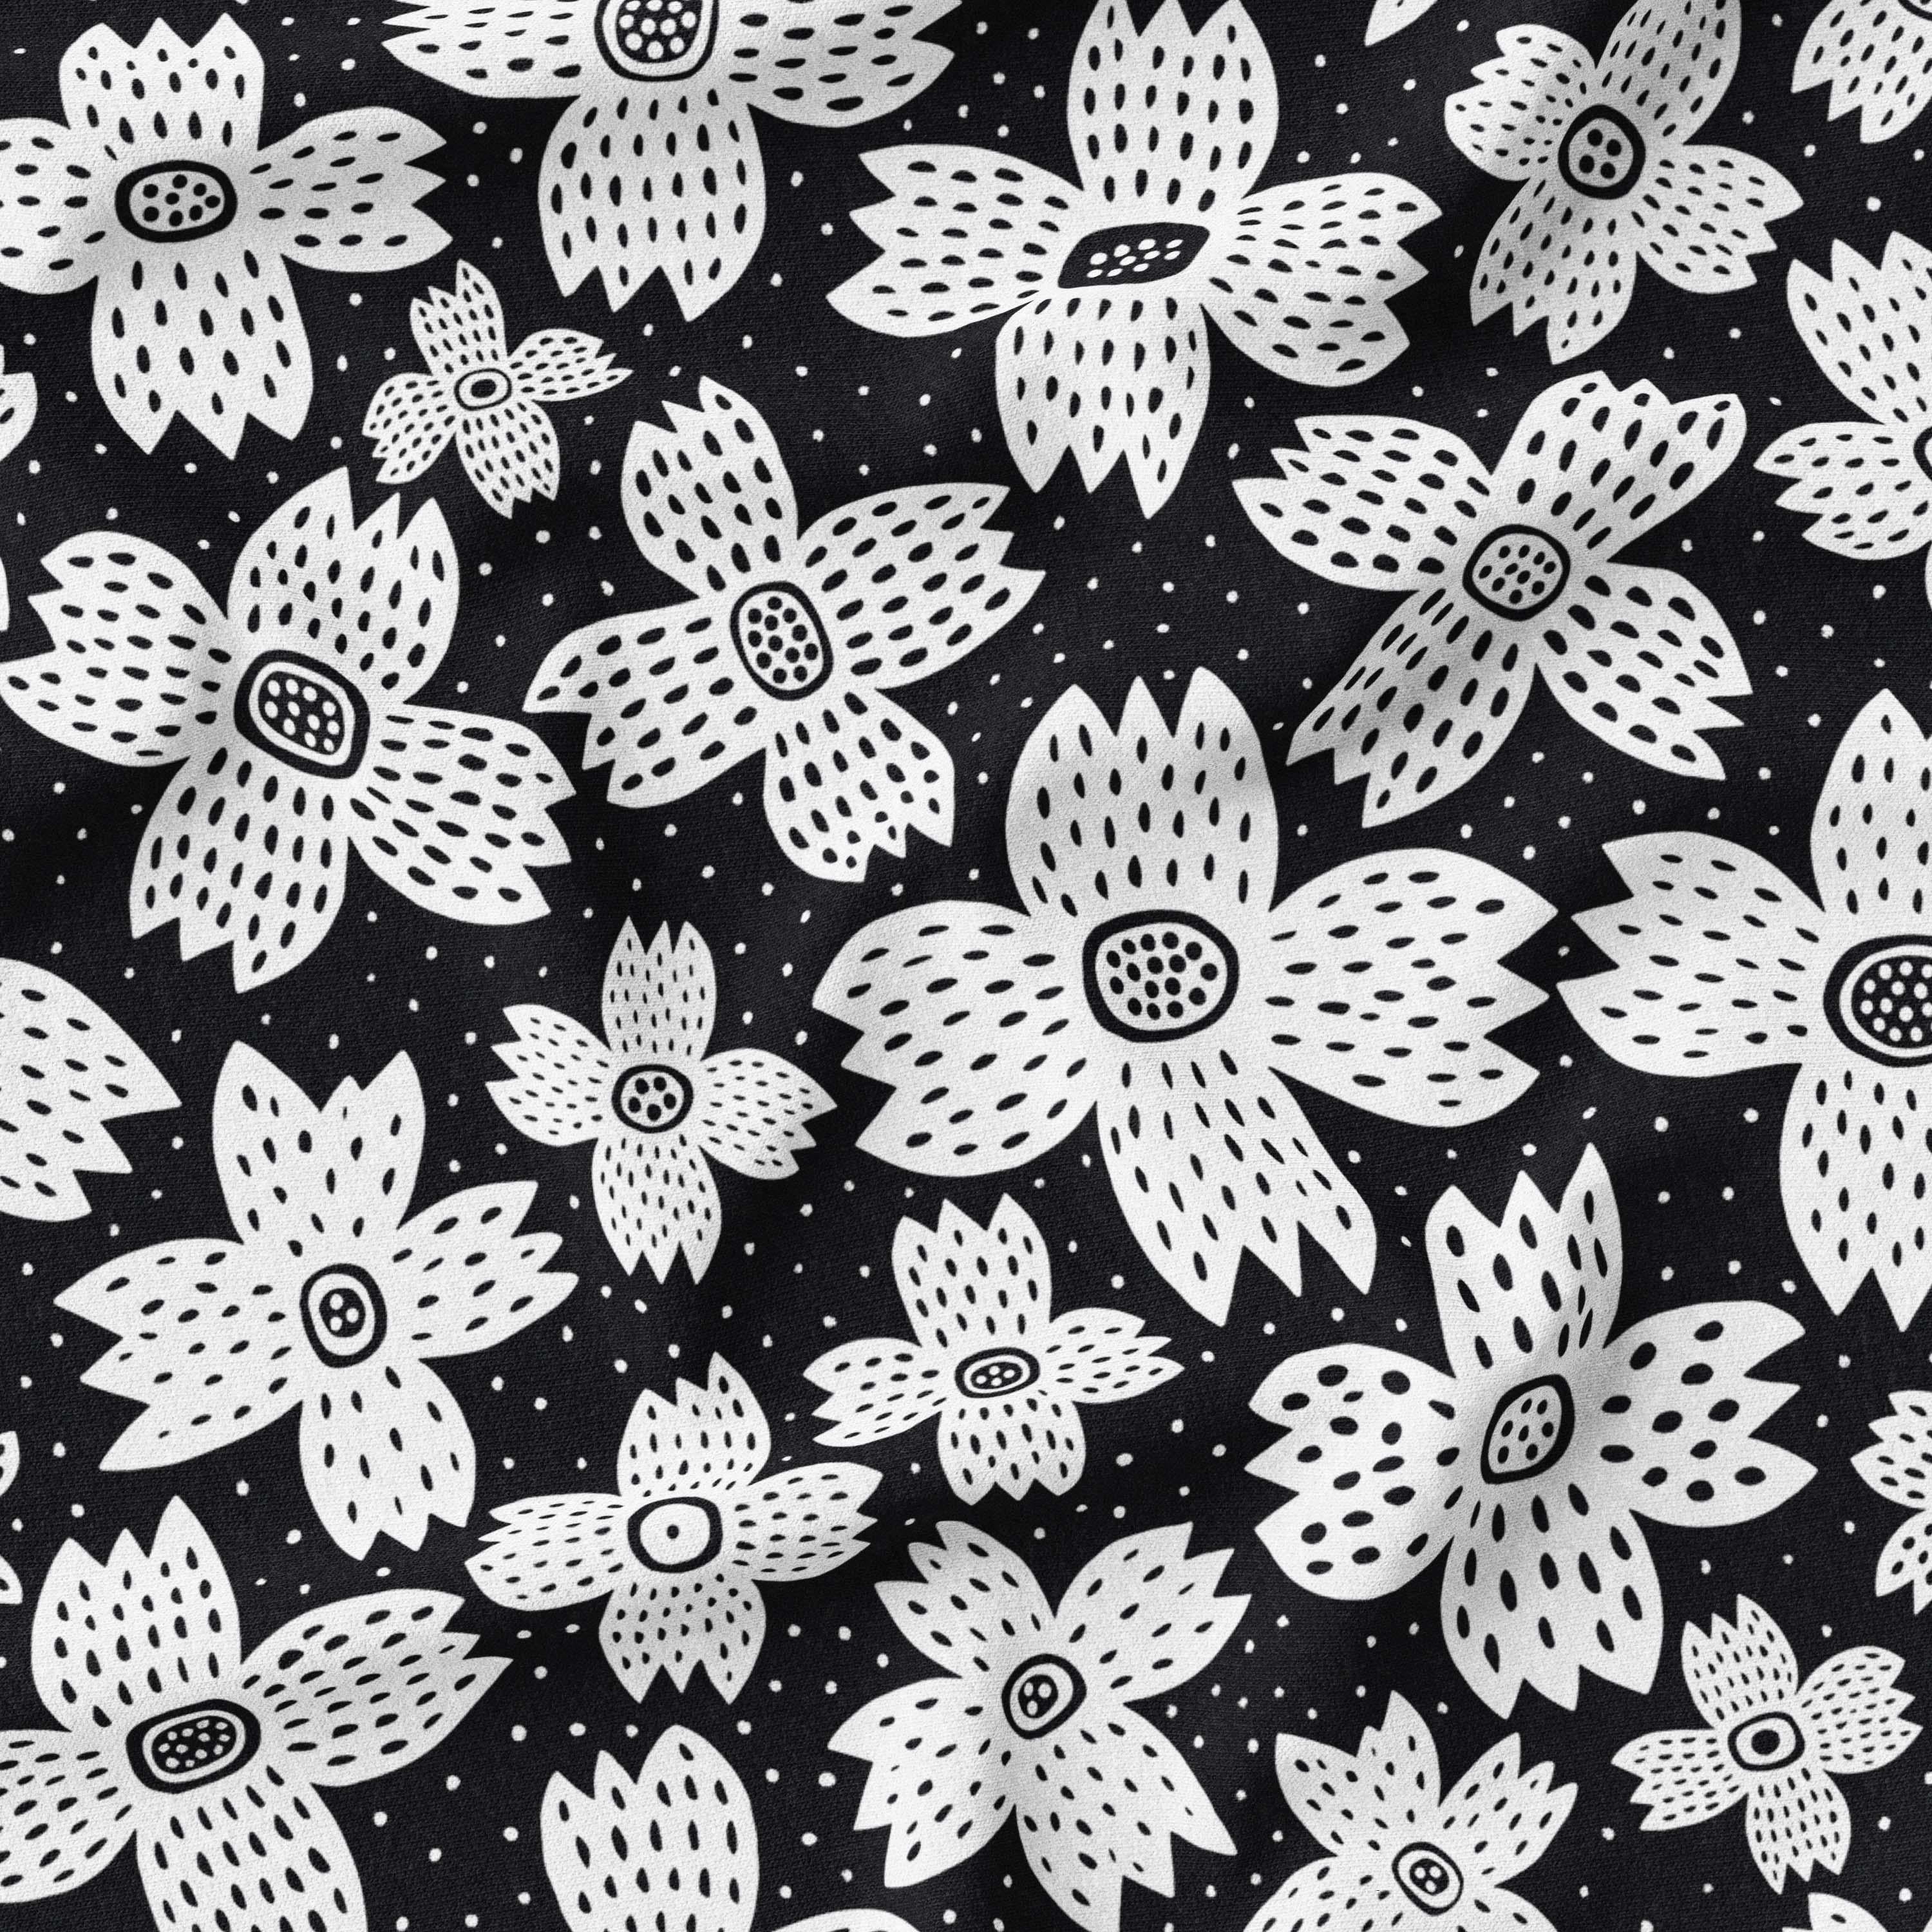 Black and white monochrome daisy print fabric, perfect for versatile fashion and home decor